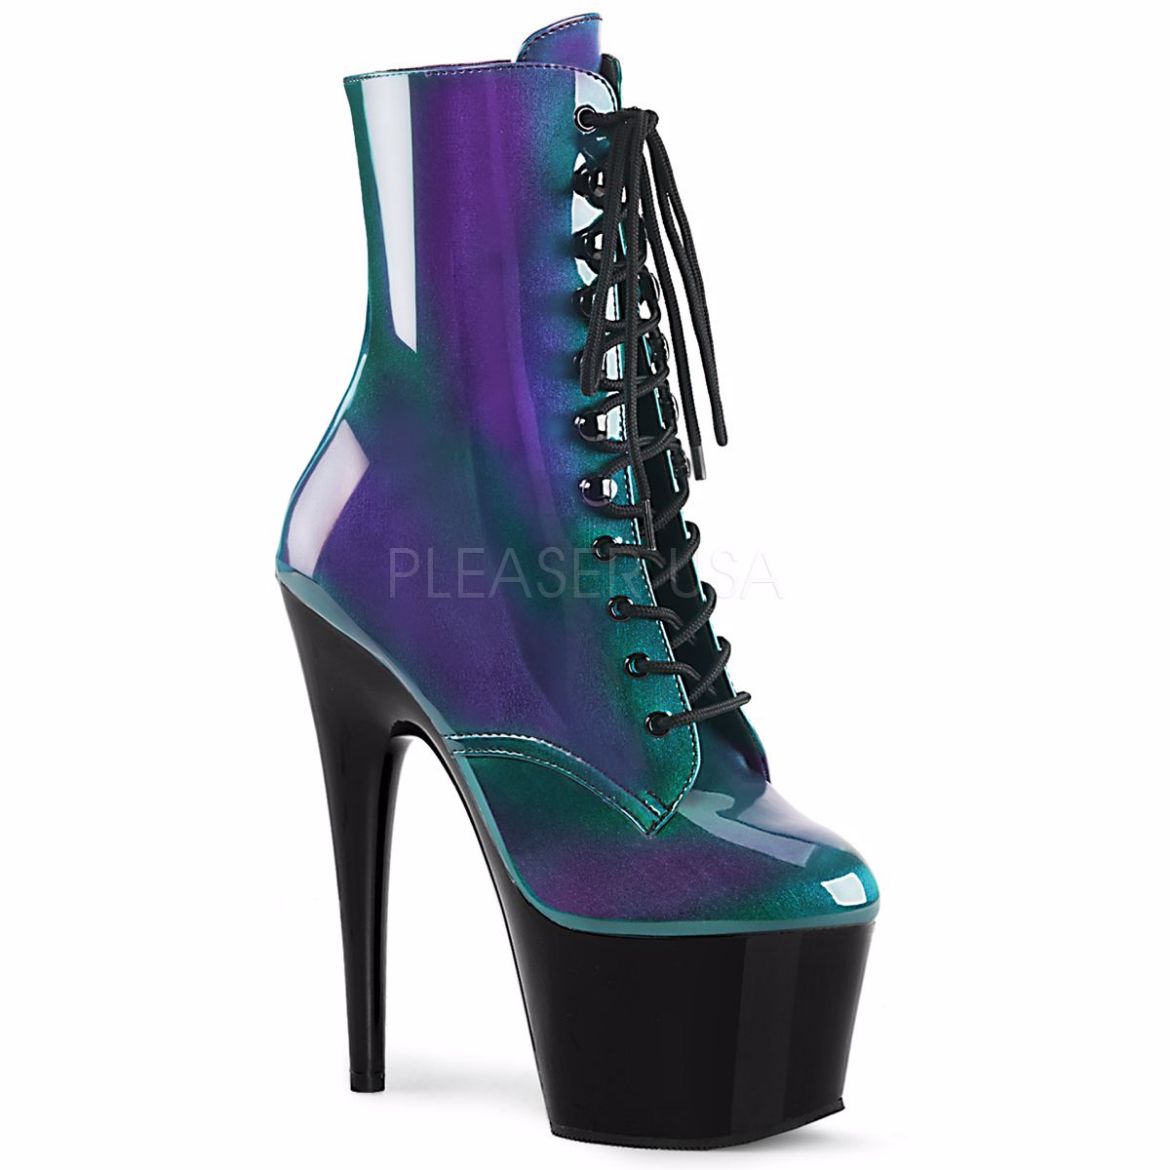 Product image of Pleaser Adore-1020Shg Purple-Green/Black, 7 inch (17.8 cm) Heel, 2 3/4 inch (7 cm) Platform Ankle Boot